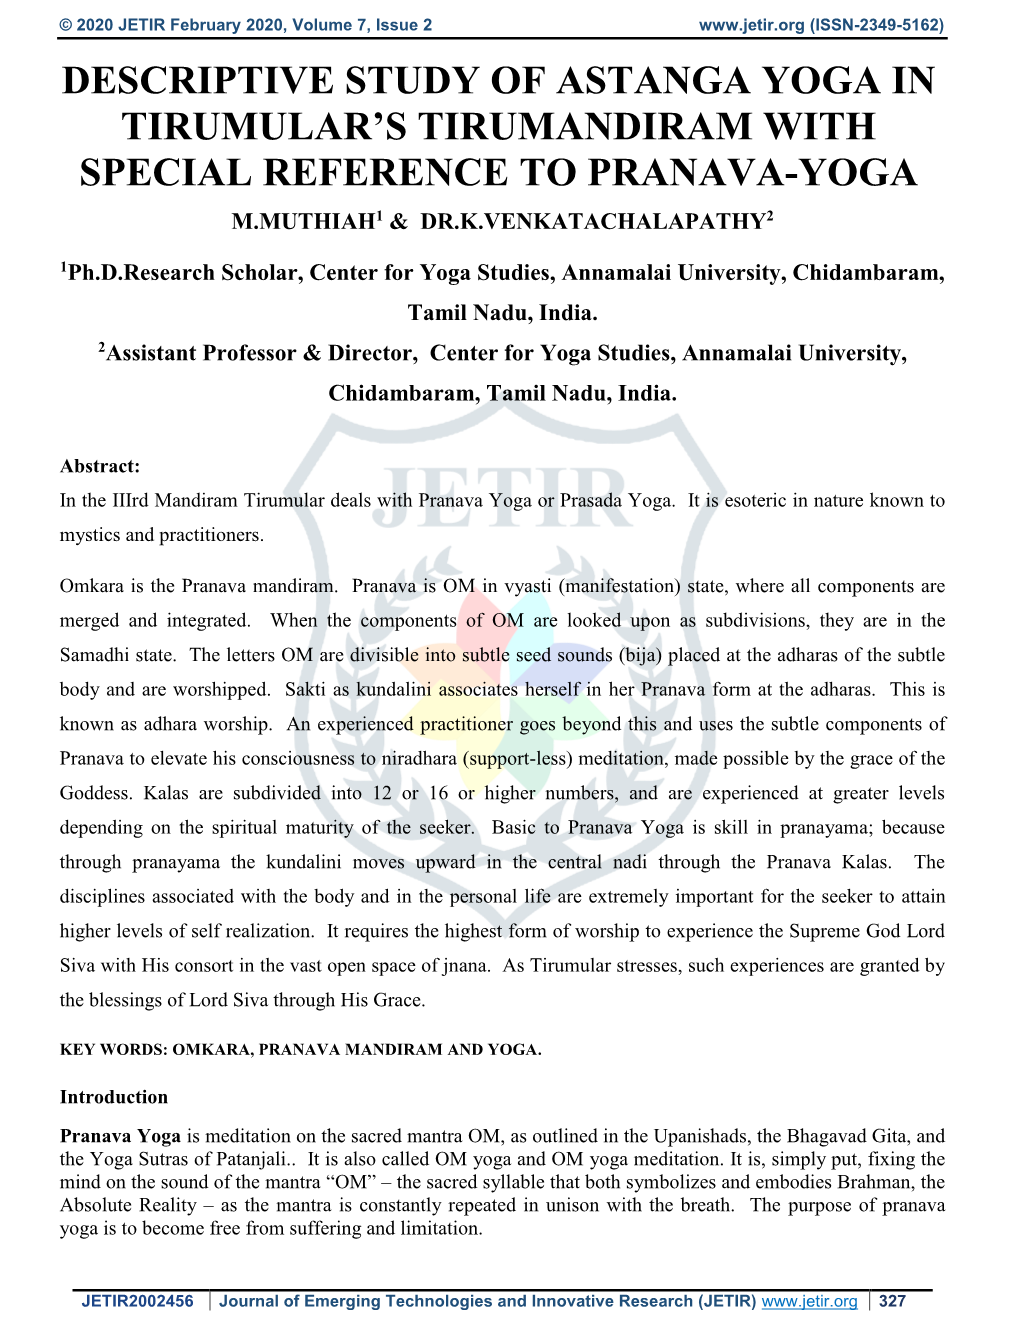 Descriptive Study of Astanga Yoga in Tirumular's Tirumandiram with Special Reference to Pranava-Yoga